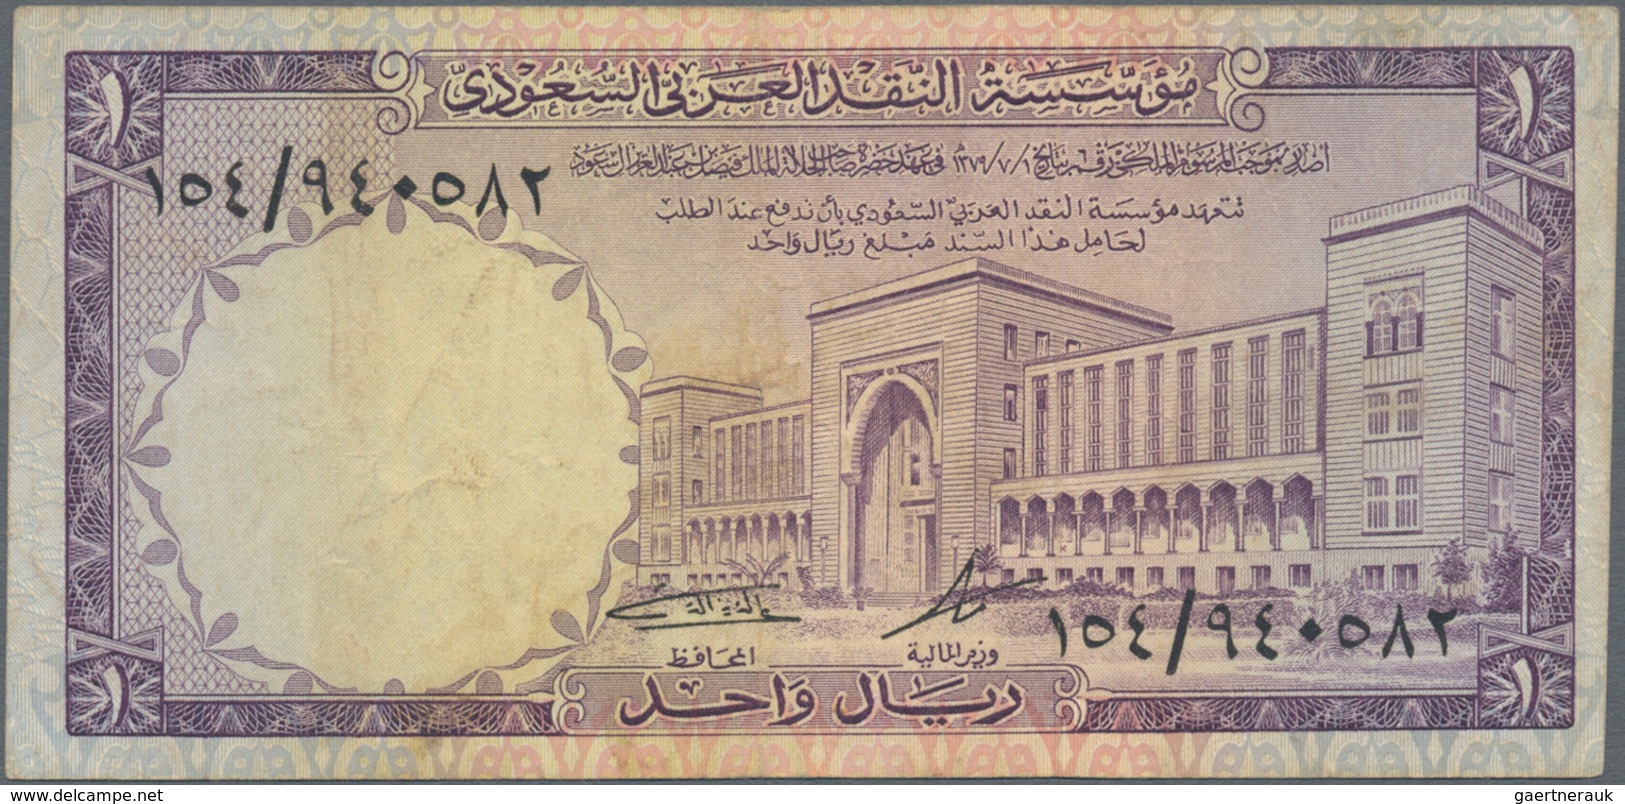 Saudi Arabia  / Saudi Arabien: L. AH1379 ND(1968) Issue, set with 4 banknotes 2x 1 Riyal P.11a (UNC)